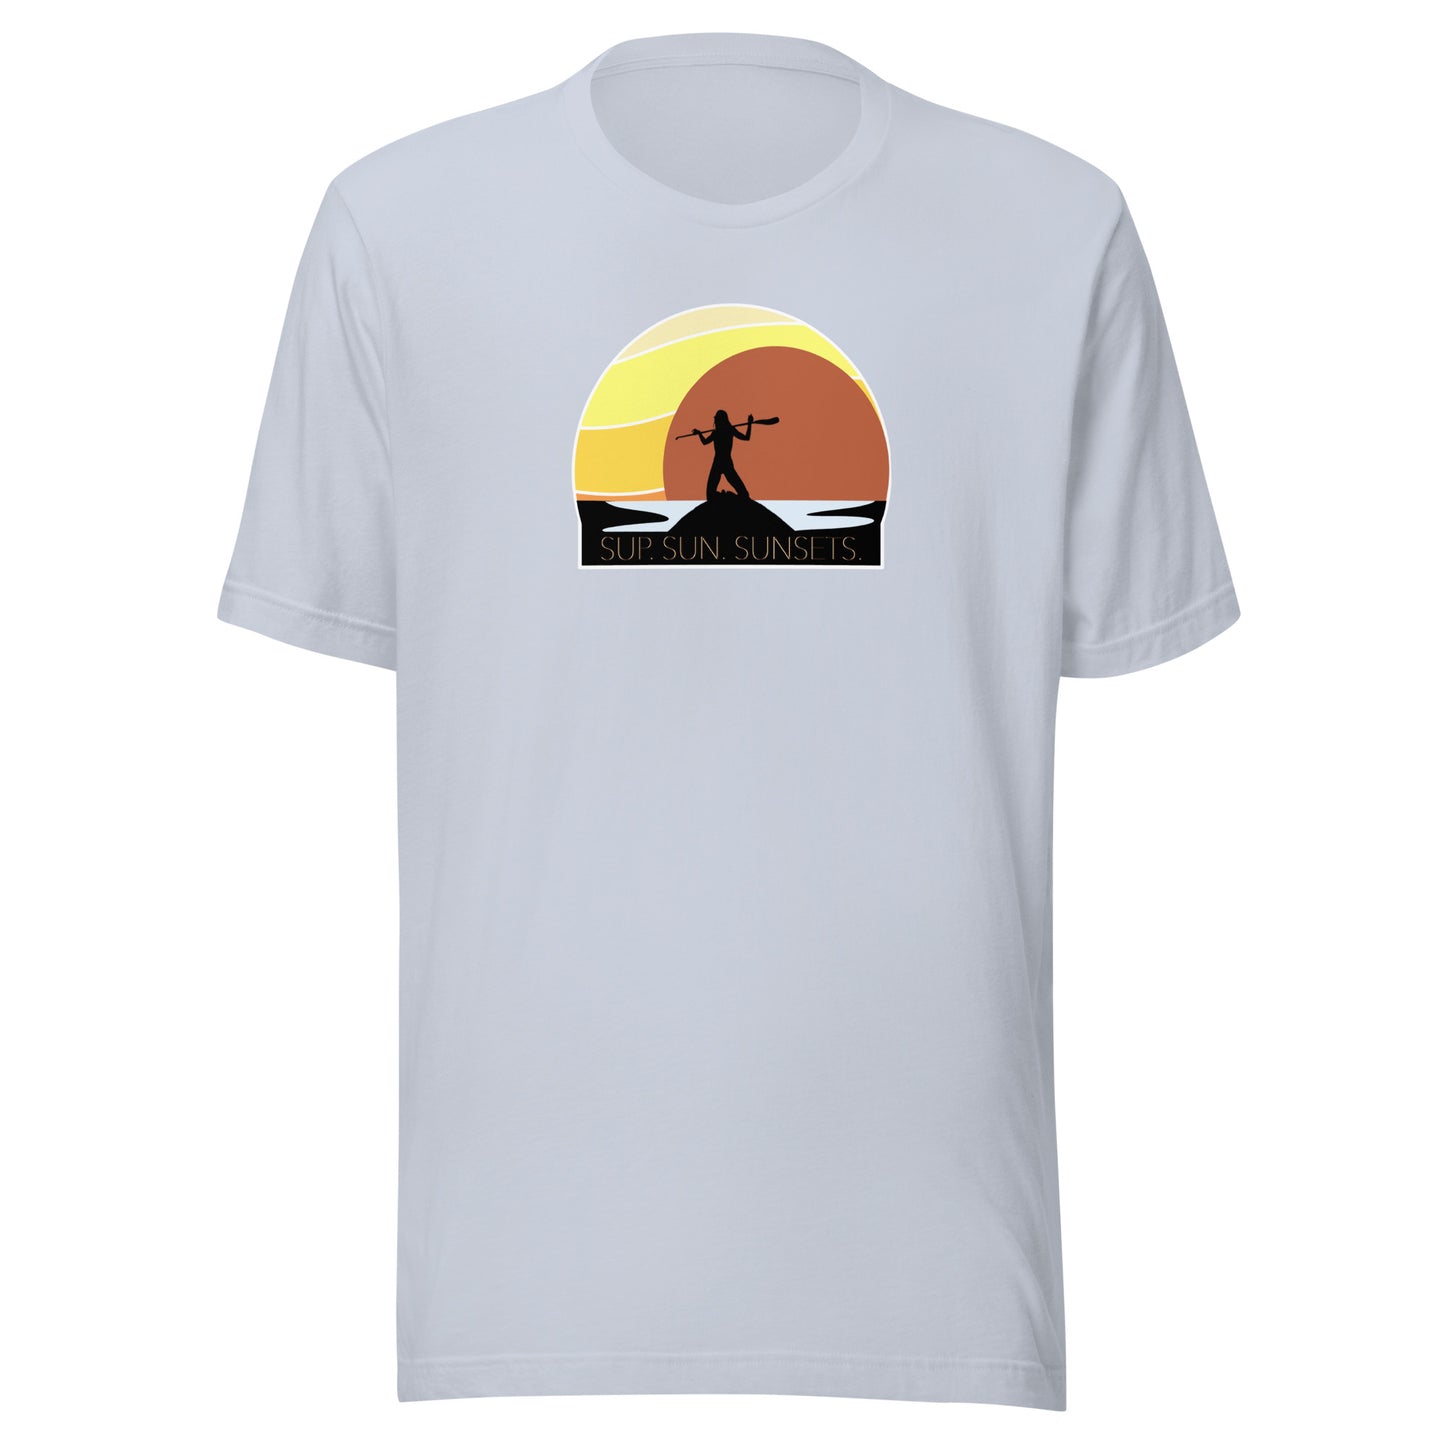 SUP. SEA. SUNSETS. - Unisex Shirt